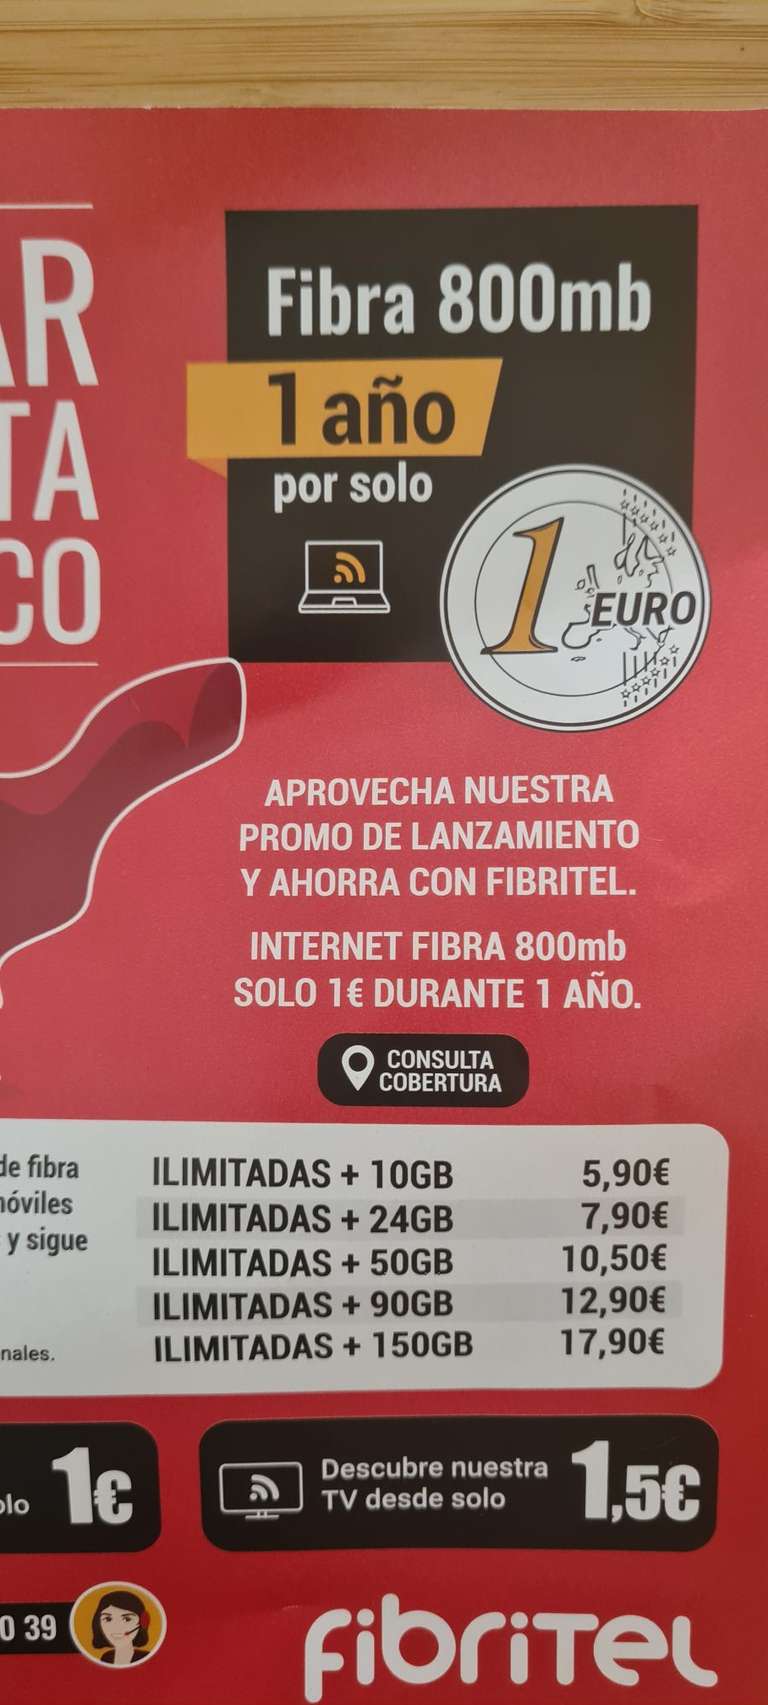 Internet 800Mb por 1€ durante 12 meses